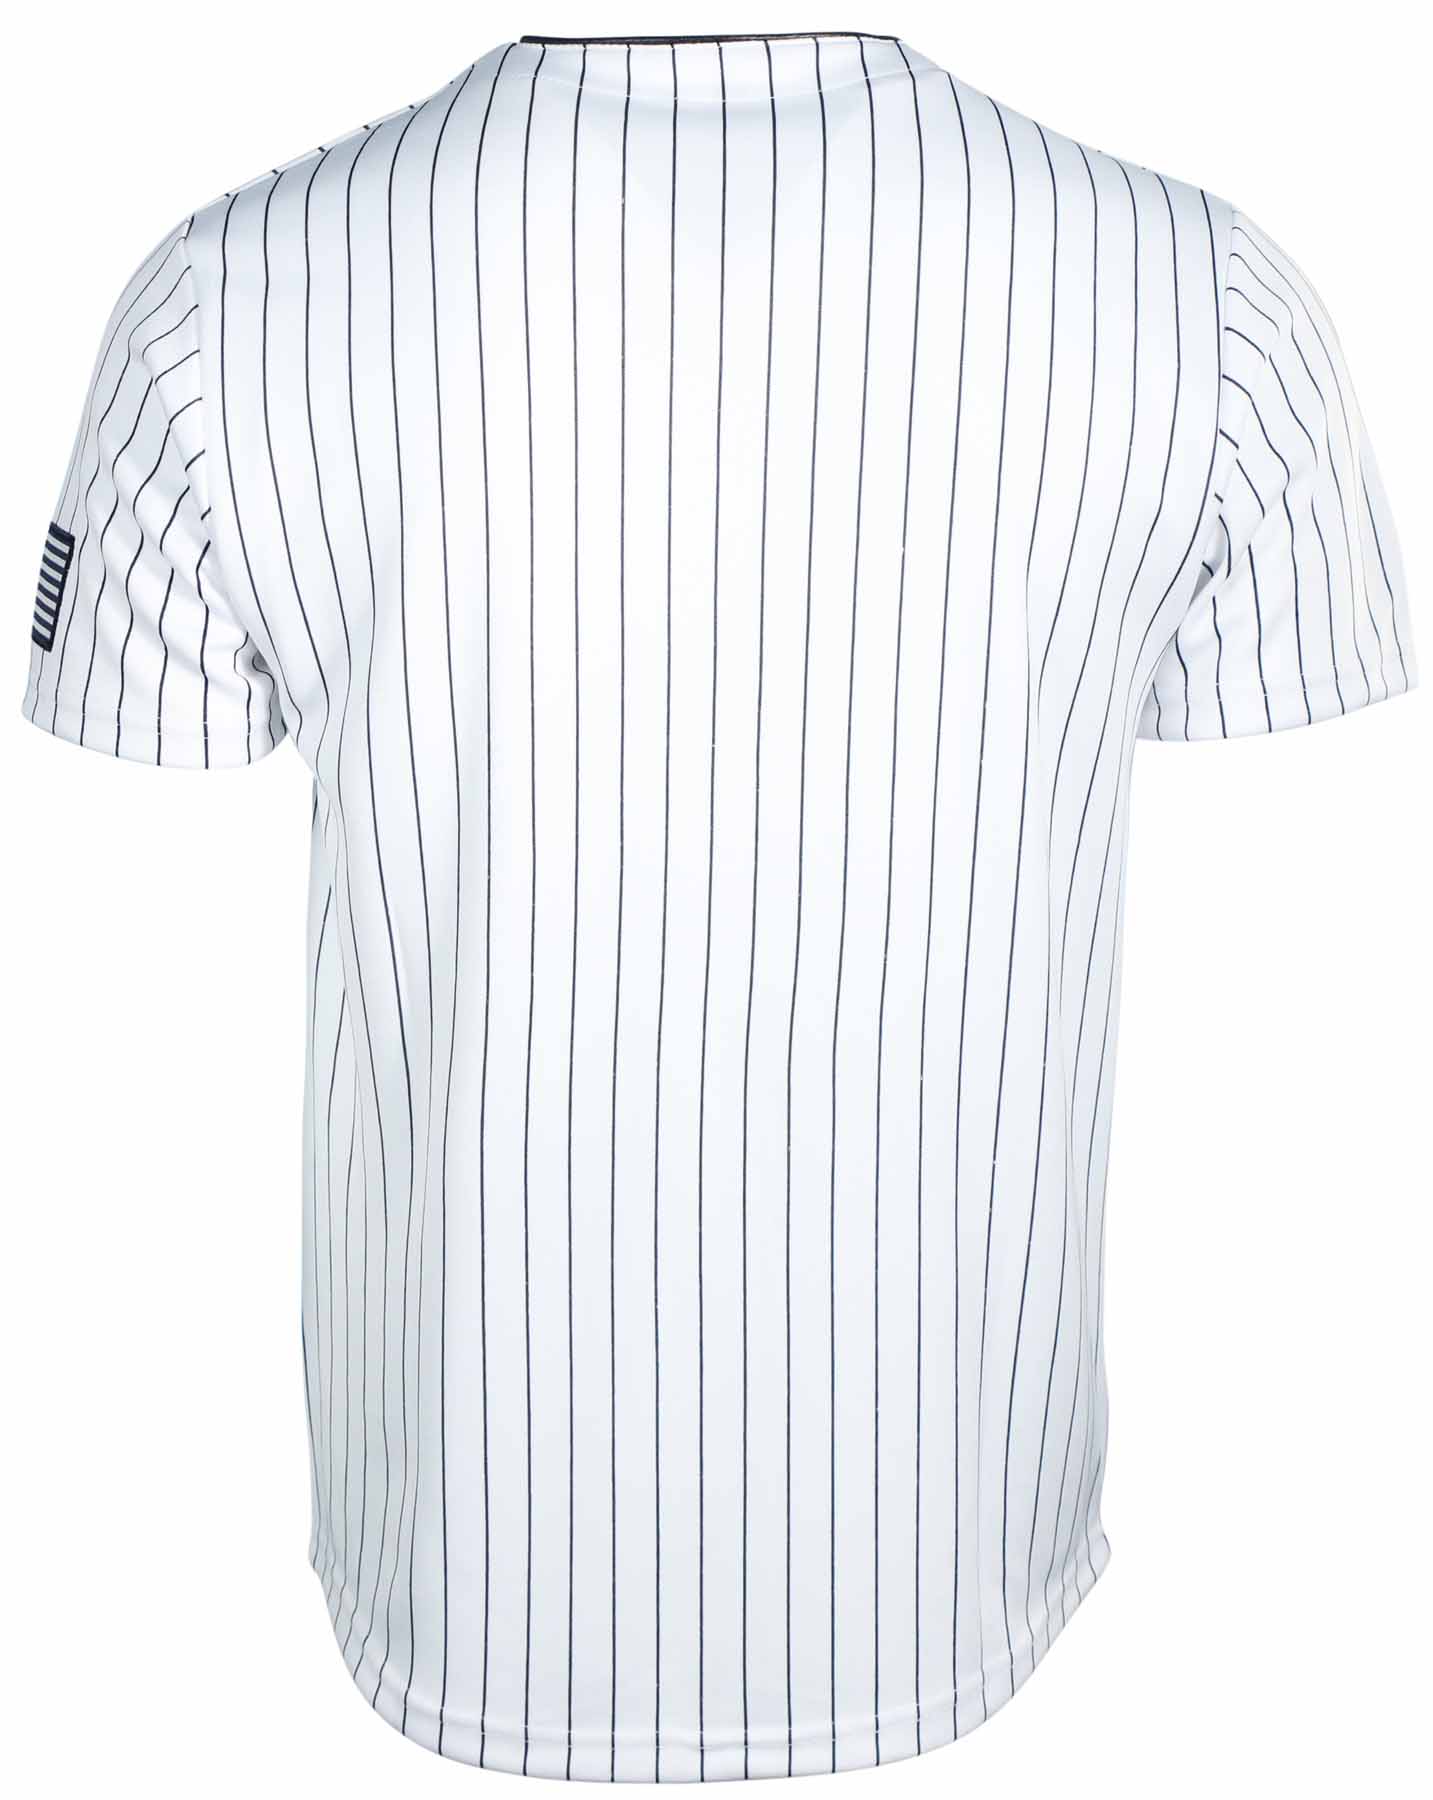 True Rock Men's New York Slim Fit Pinstripe Baseball Jersey (Navy/White,  Small) 